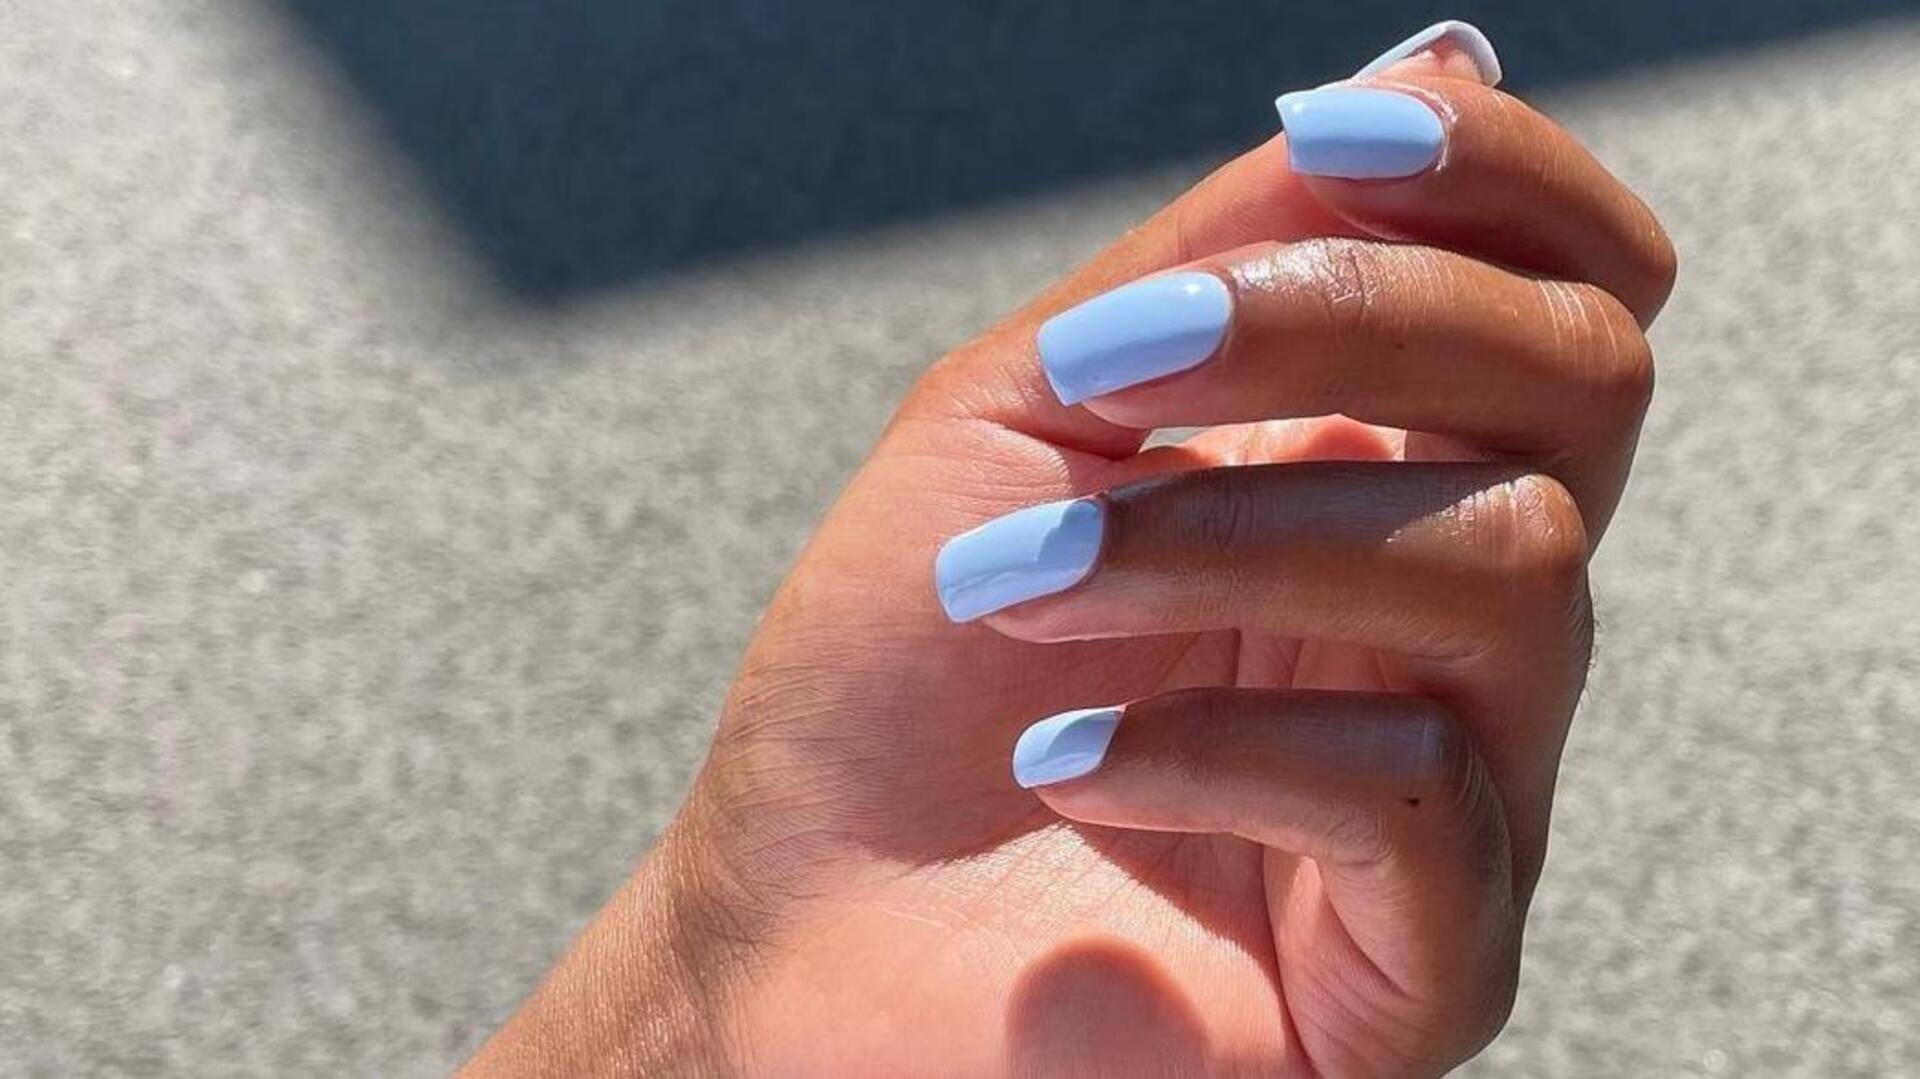 Blueberry milk nails: A dreamy manicure trend